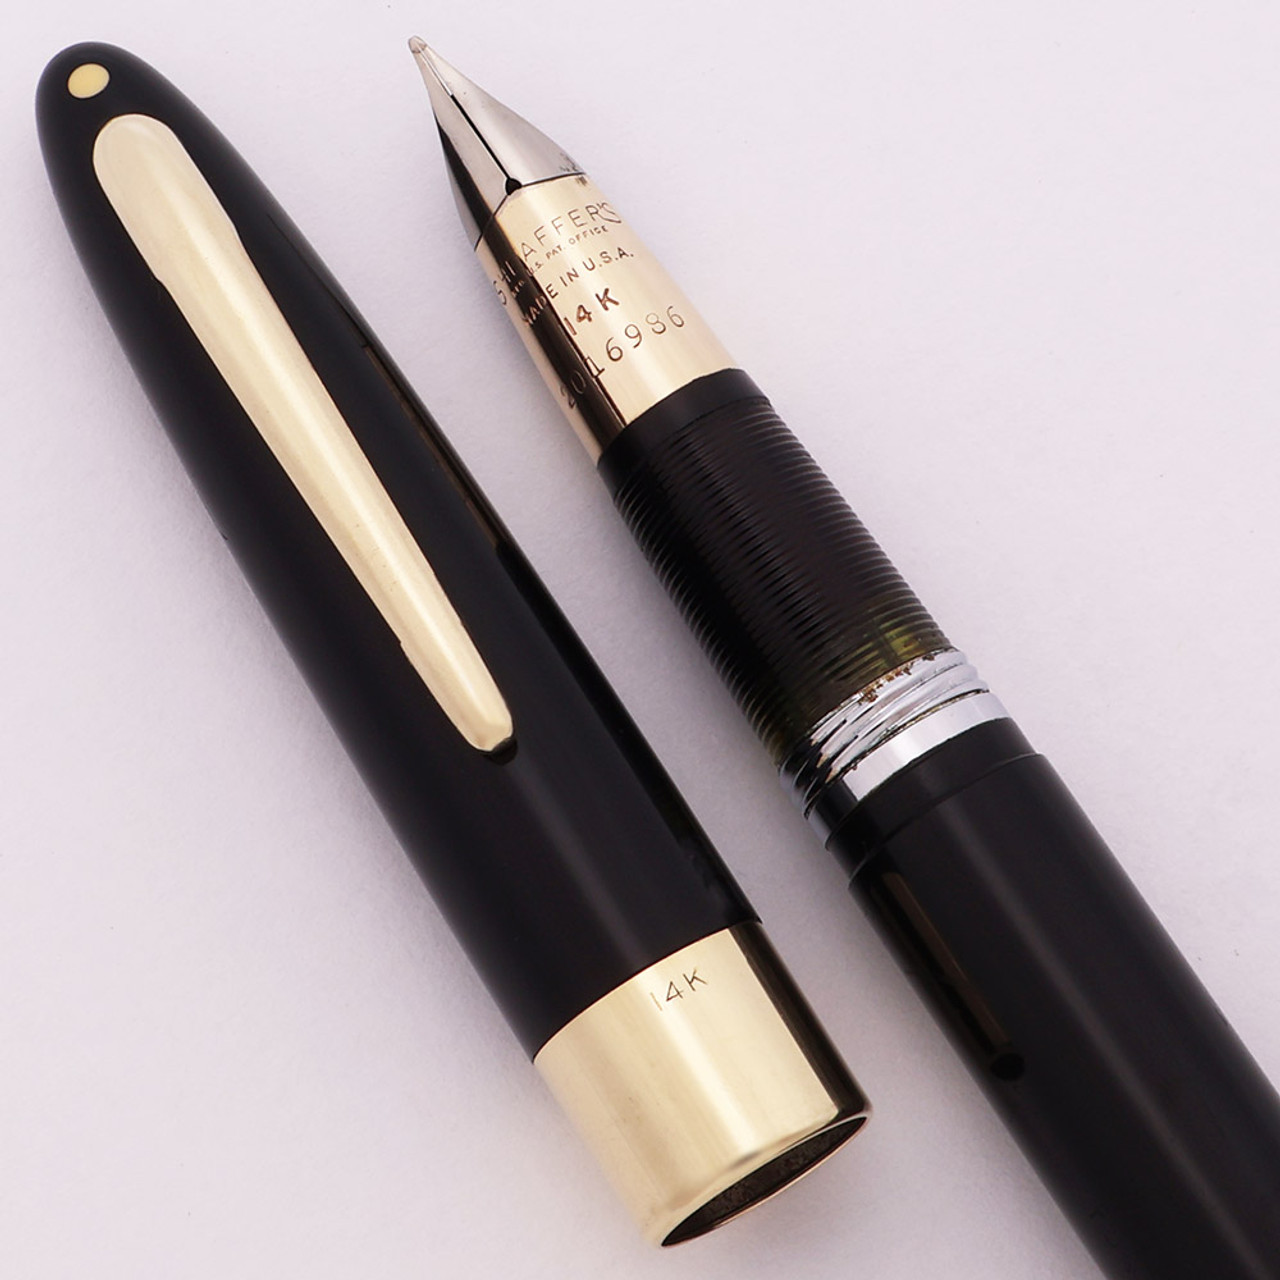 Sheaffer Valiant Signature Fountain Pen - Black, 14k Cap Band, Touchdown Fill, Medium 14k Nib (Excellent, Restored)